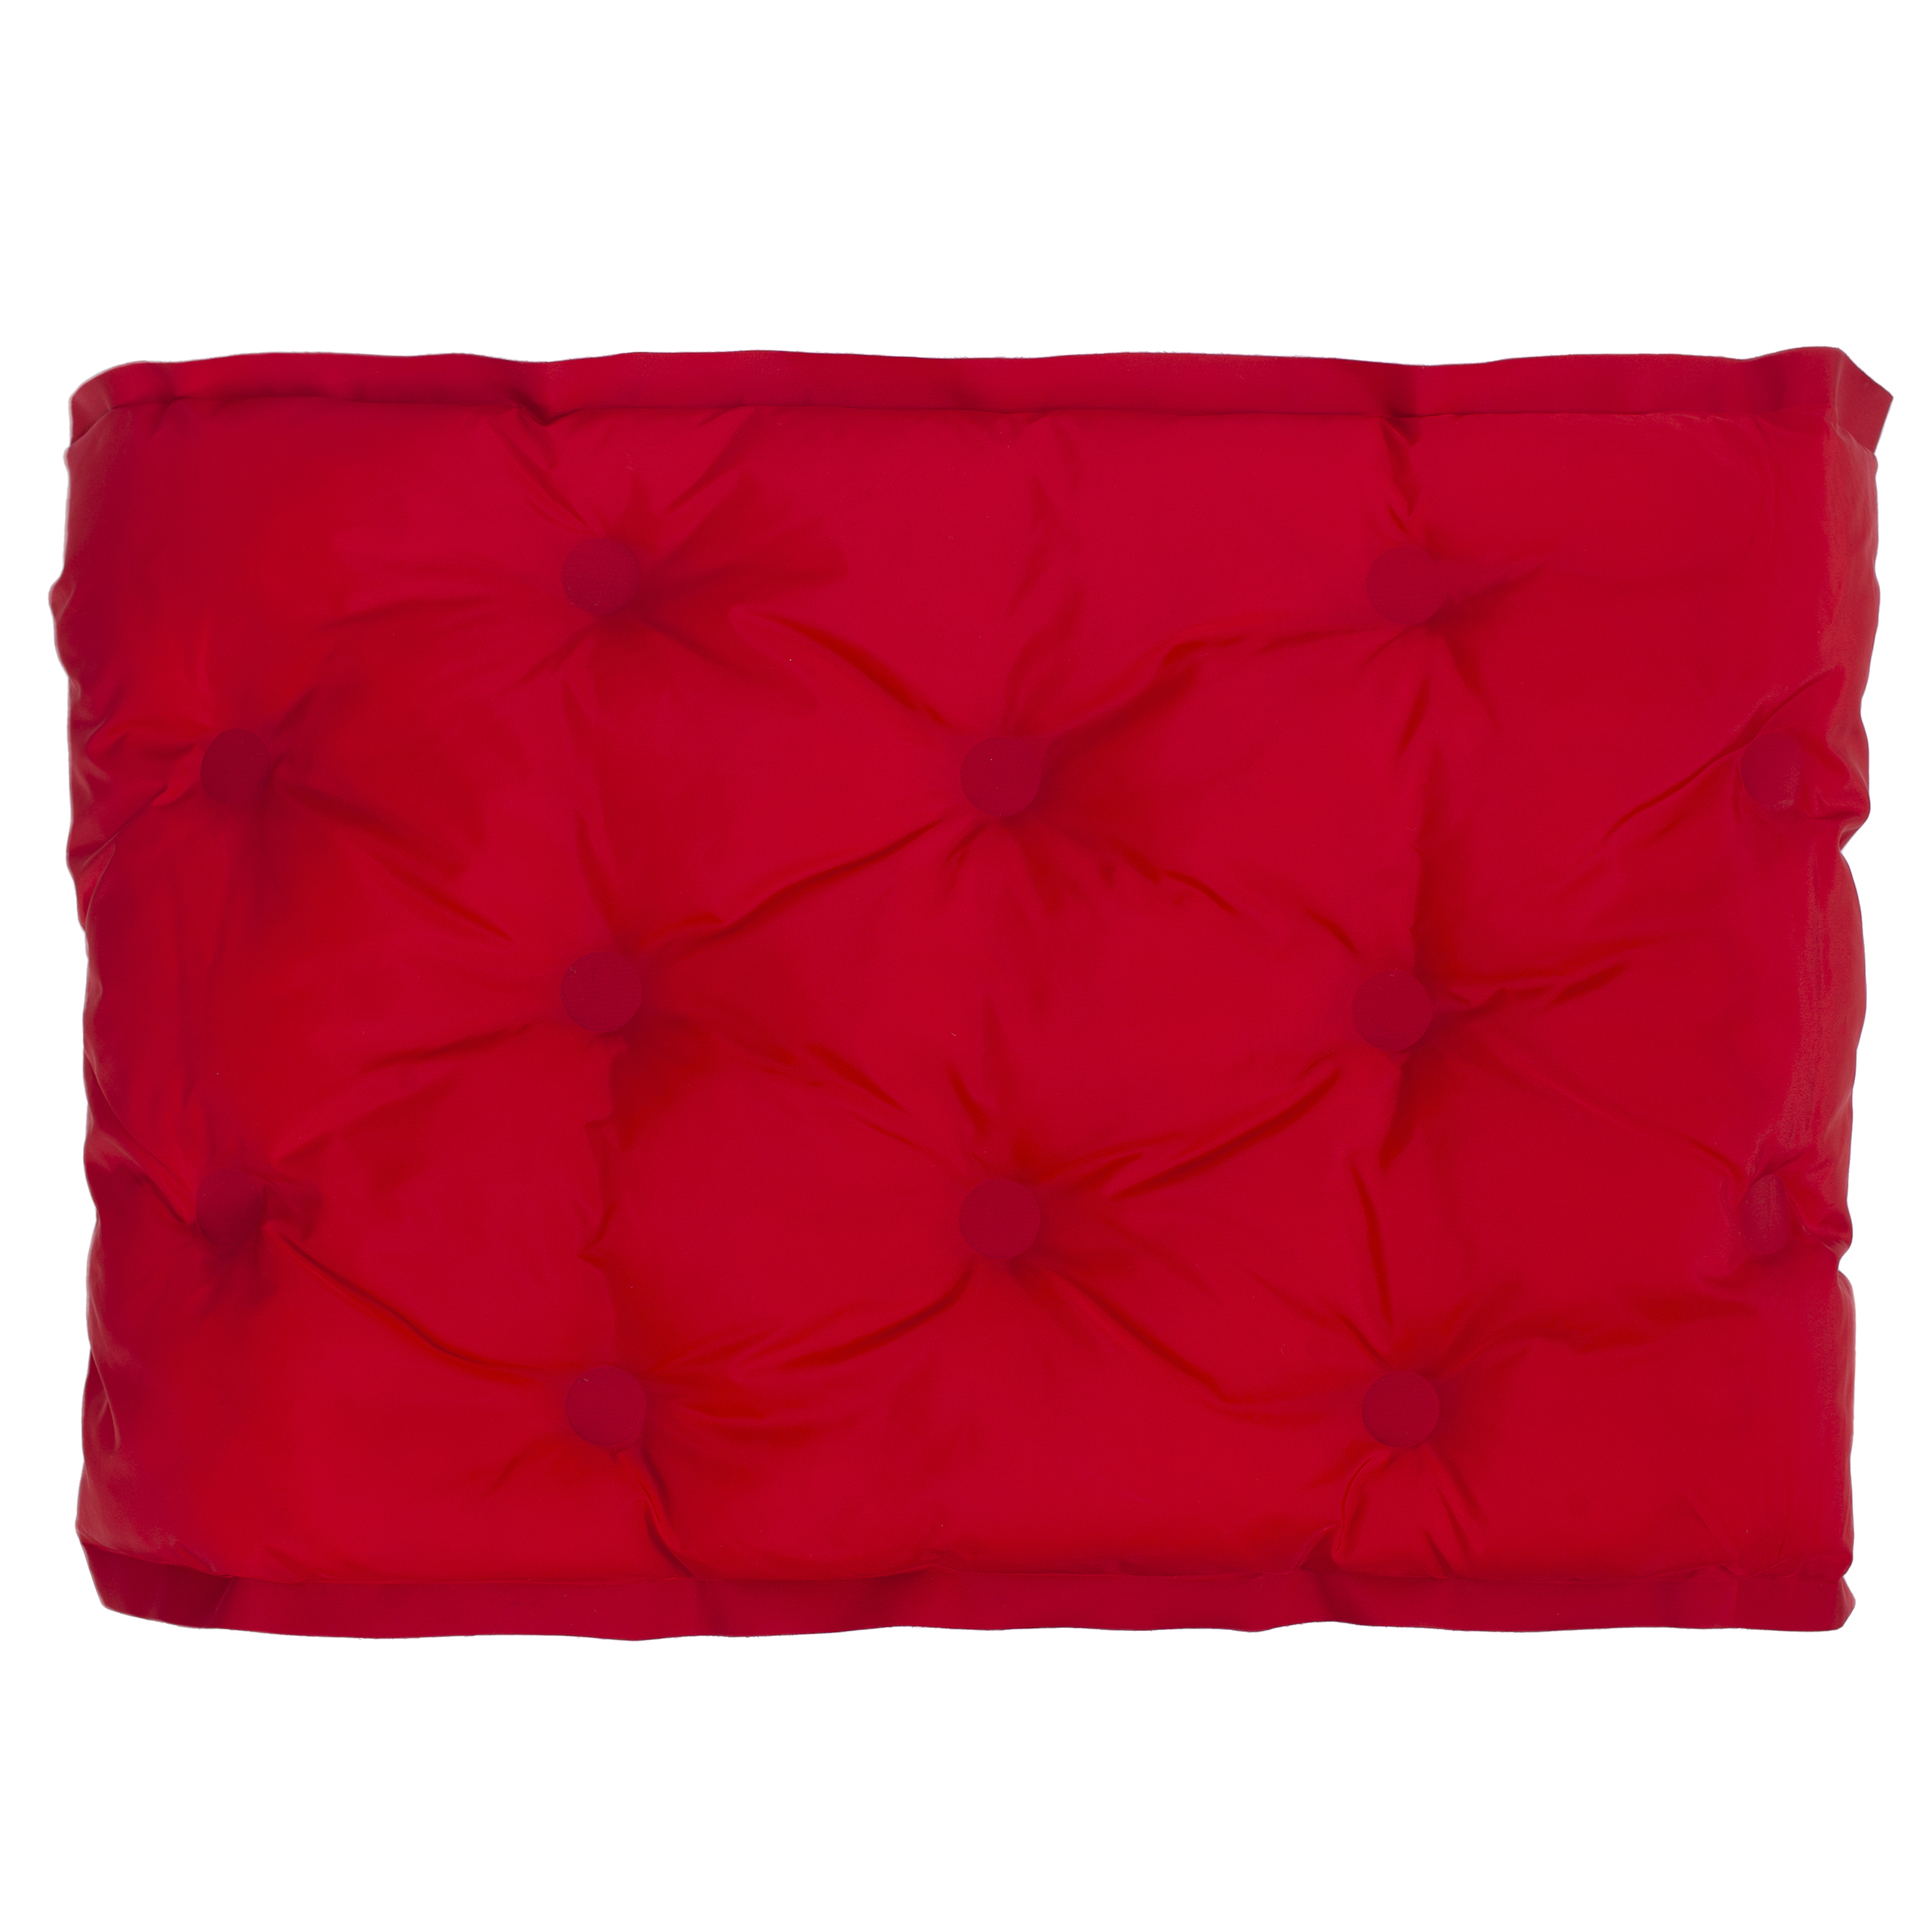 Красный шарф Glam Slam Maison Margiela S50TE0077/314, размер One Size S50TE0077/314 - фото 1